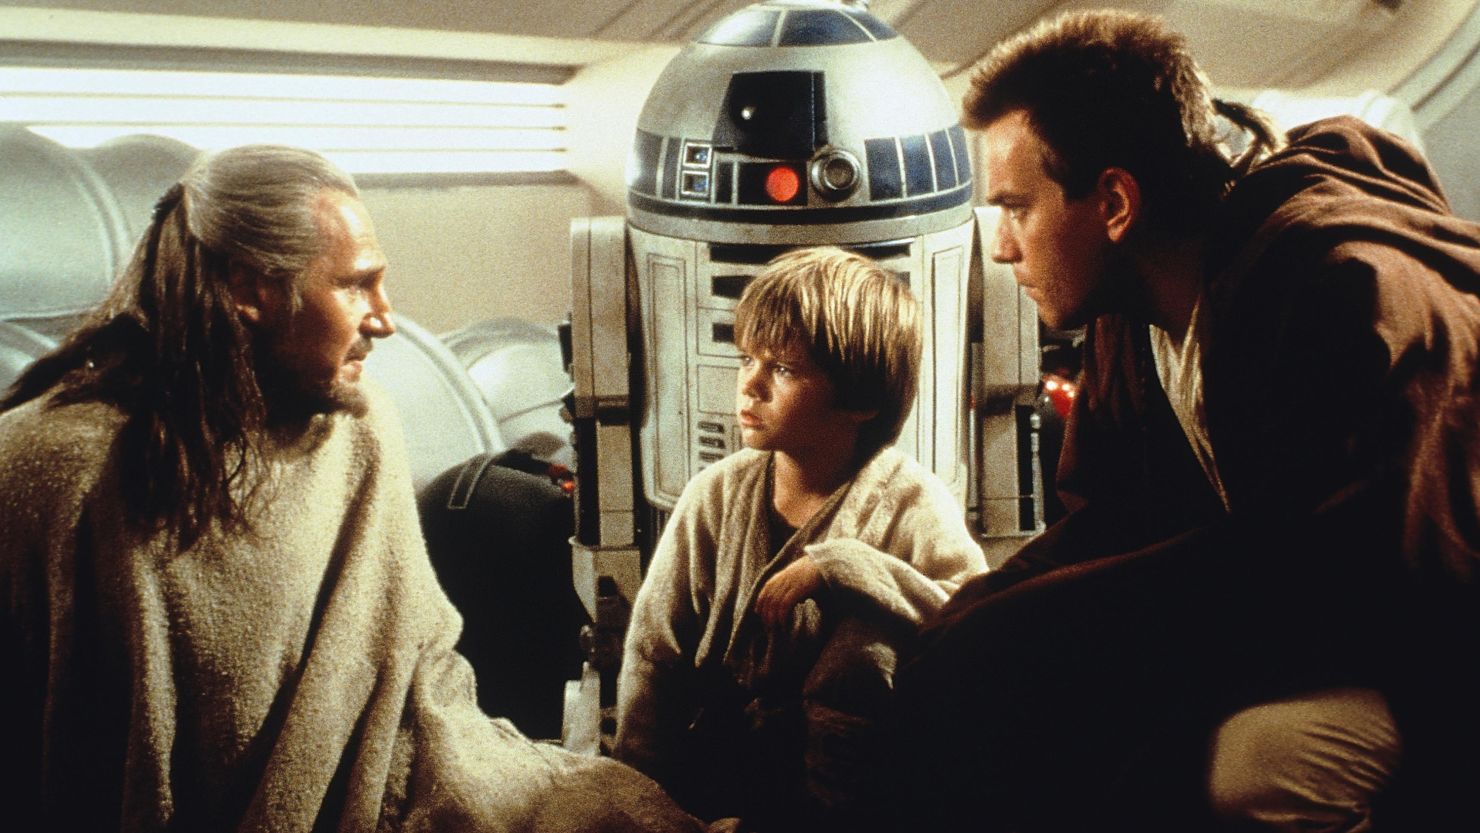 Liam Neeson, Jake Lloyd and Ewan McGregor in "Star Wars: Episode I - The Phantom Menace," released in 1999.